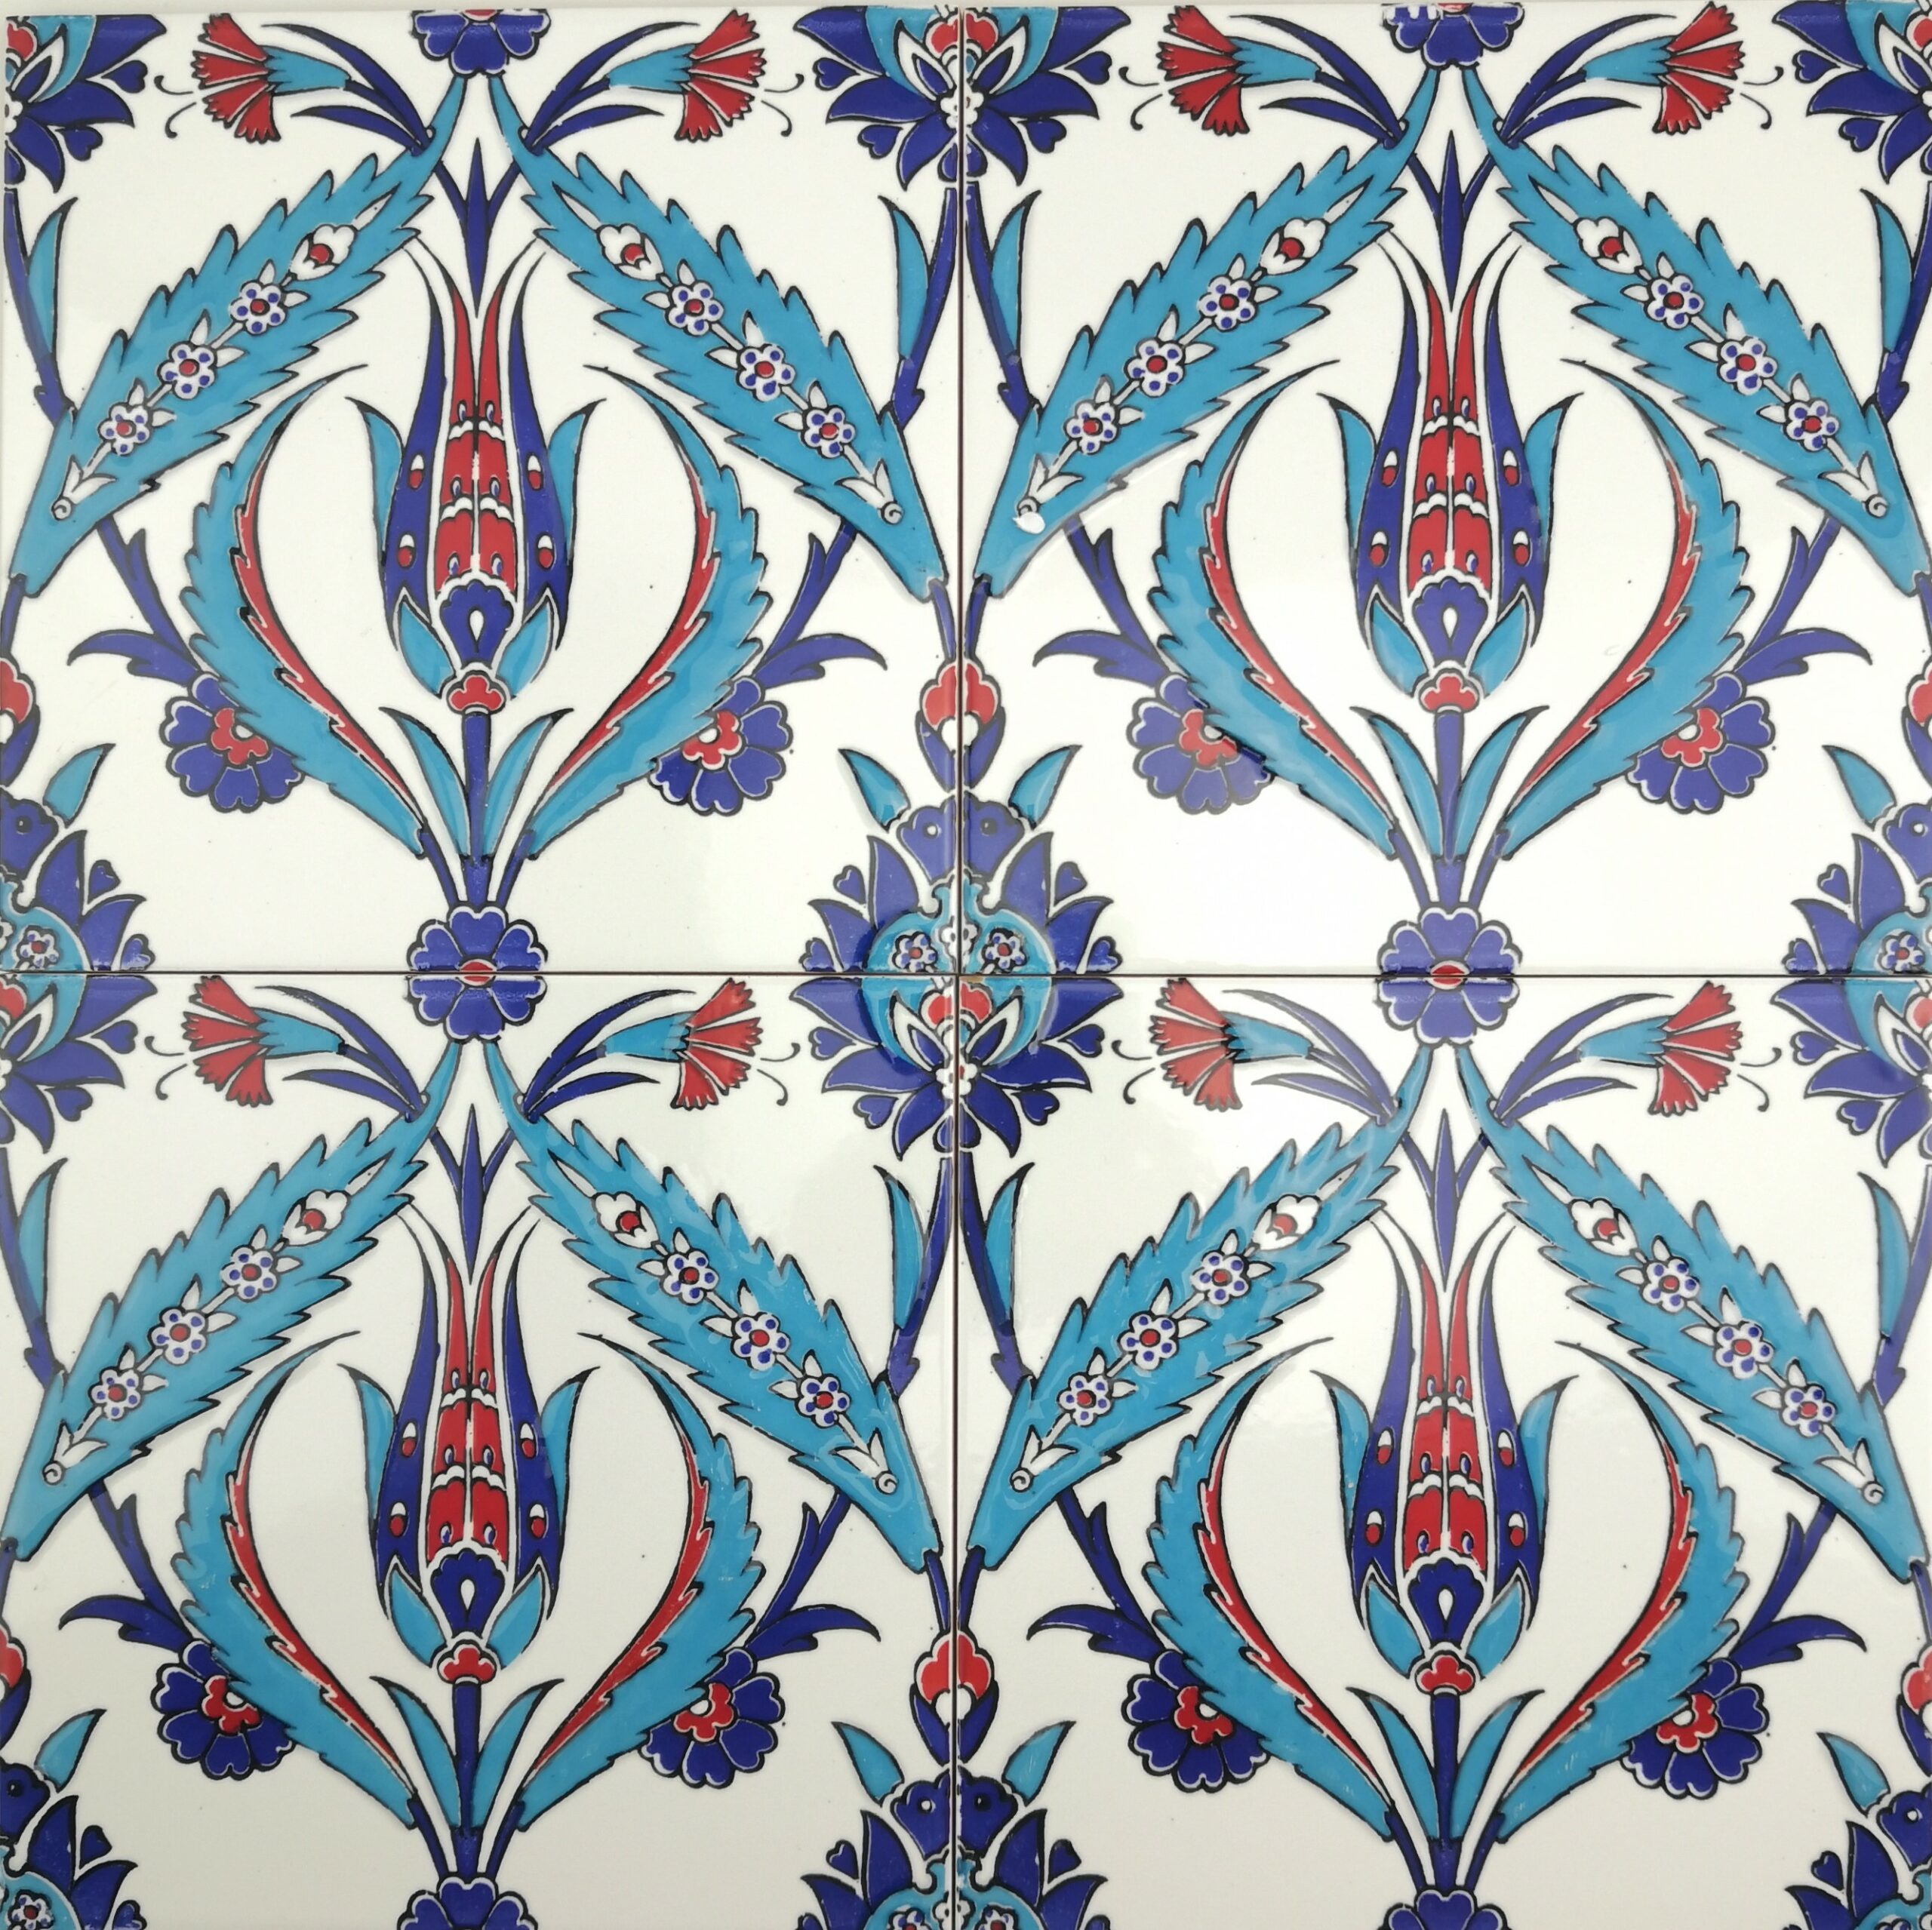 Turkish Style Ceramic Tiles - Wall Tiles - Xmas Gift - Splashback - Feature Wall